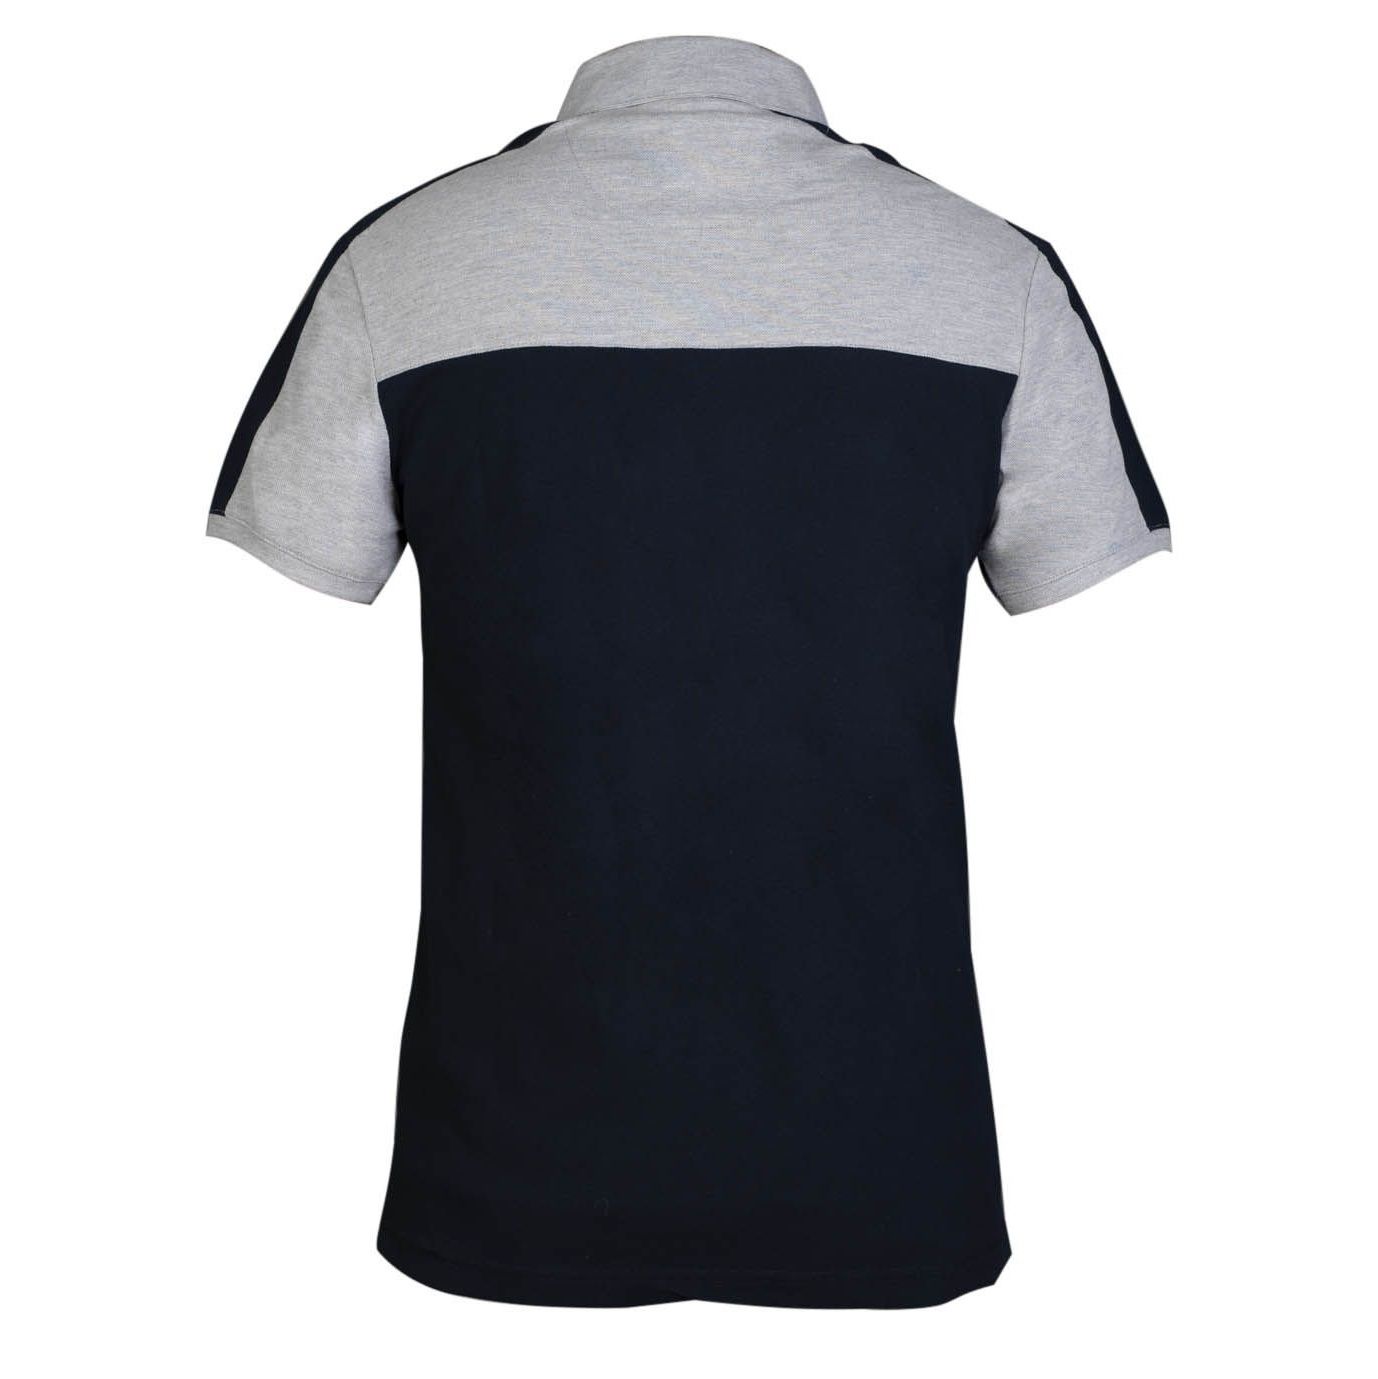 پولو شرت مردانه مدل sprd کد 215-256